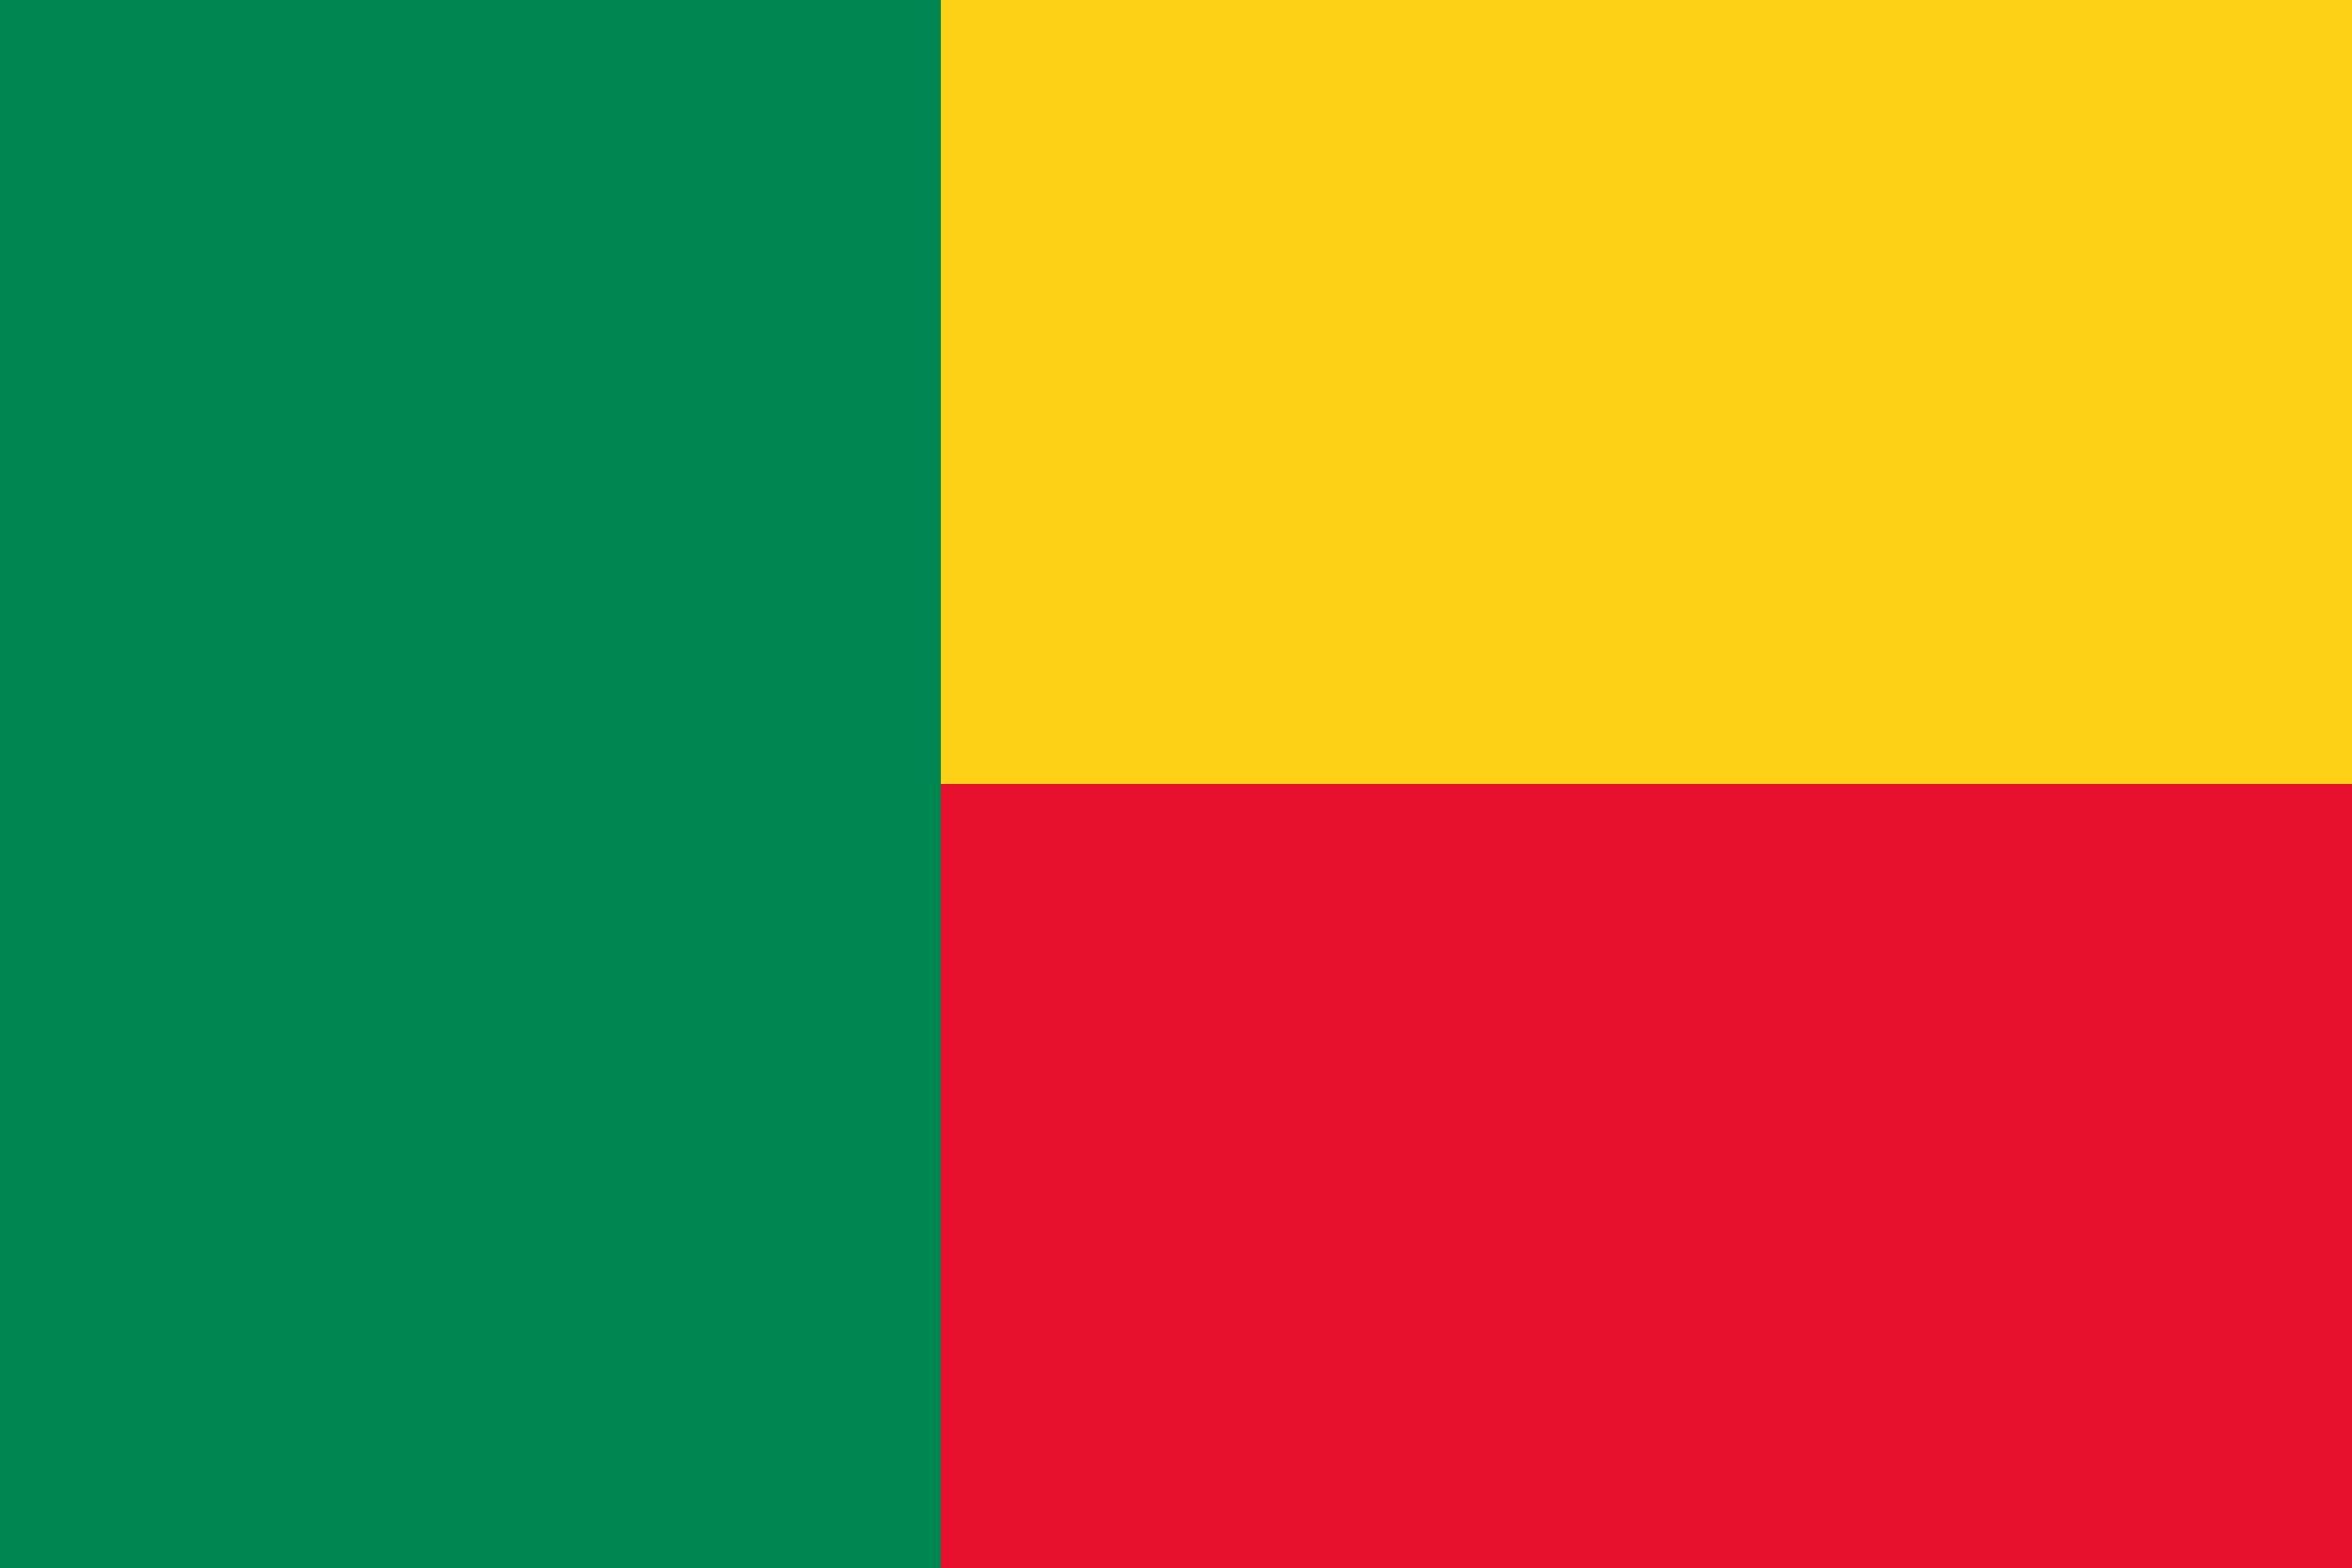 Drone Laws in Benin